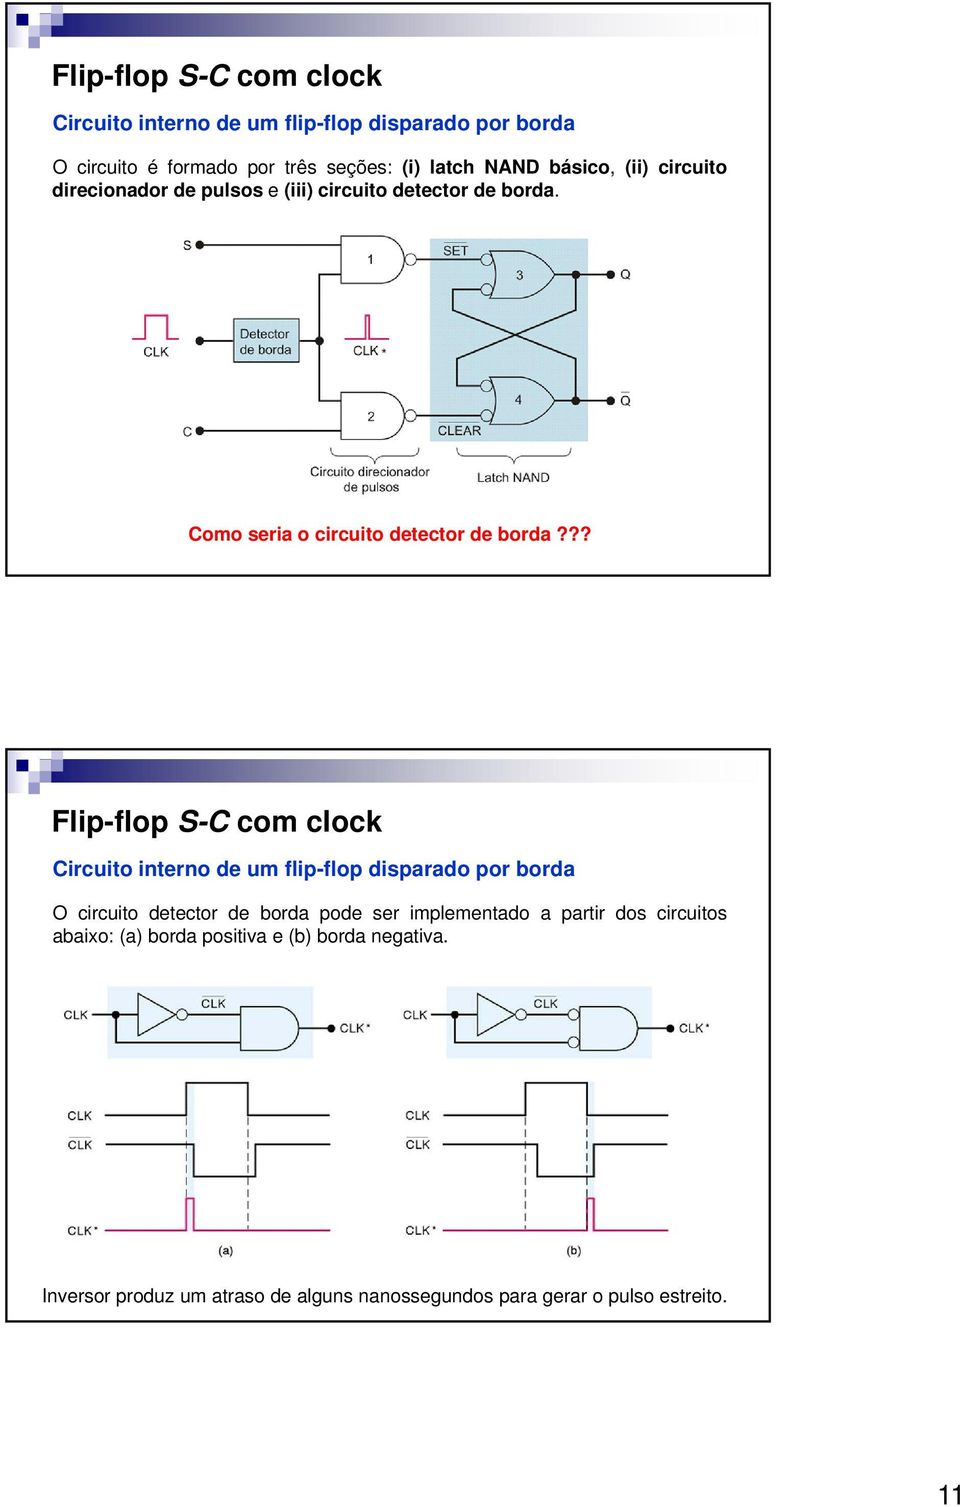 ?? Flip-flop S-C com clockk Circuito interno de um flip-flop disparado por borda O circuito detector de borda pode ser implementado a